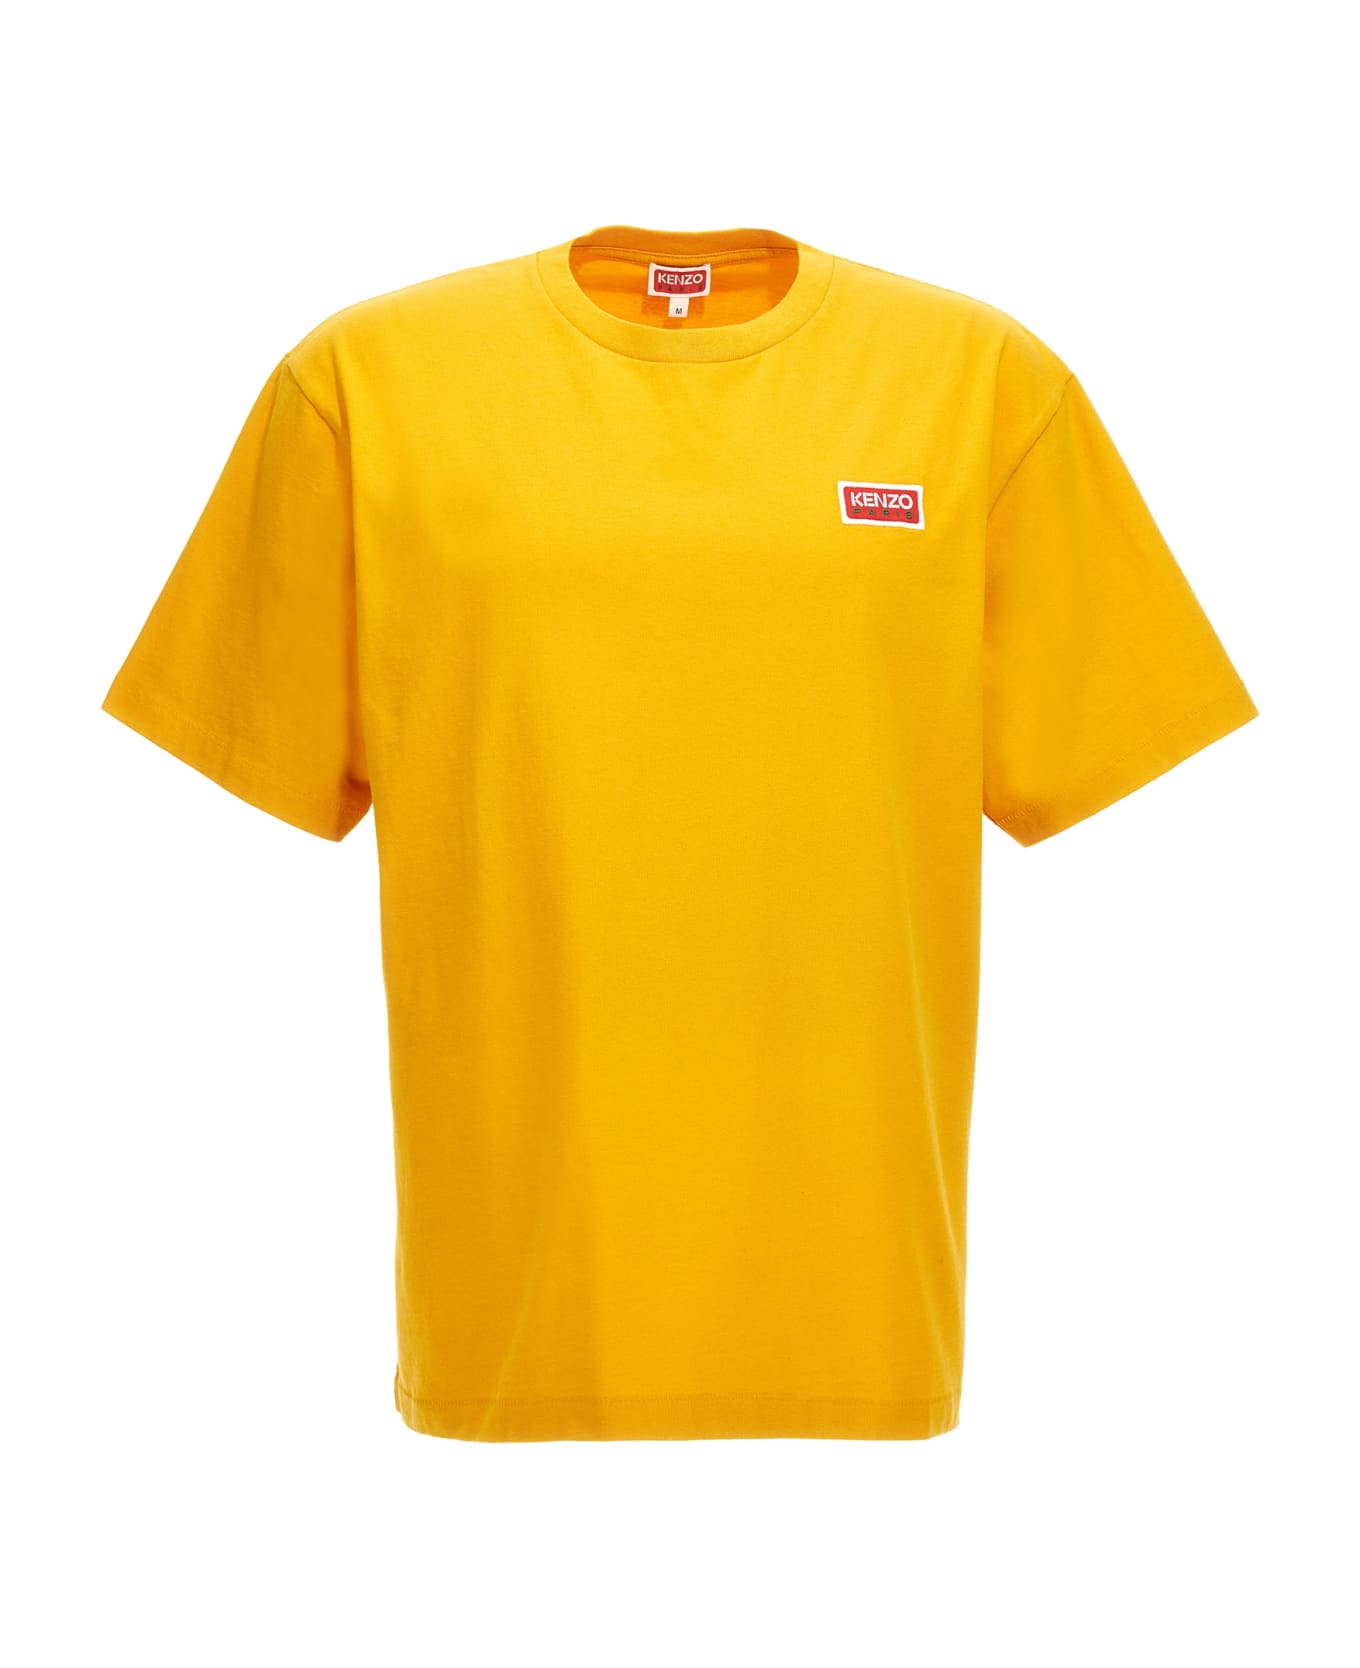 Kenzo Paris T-shirt - Yellow